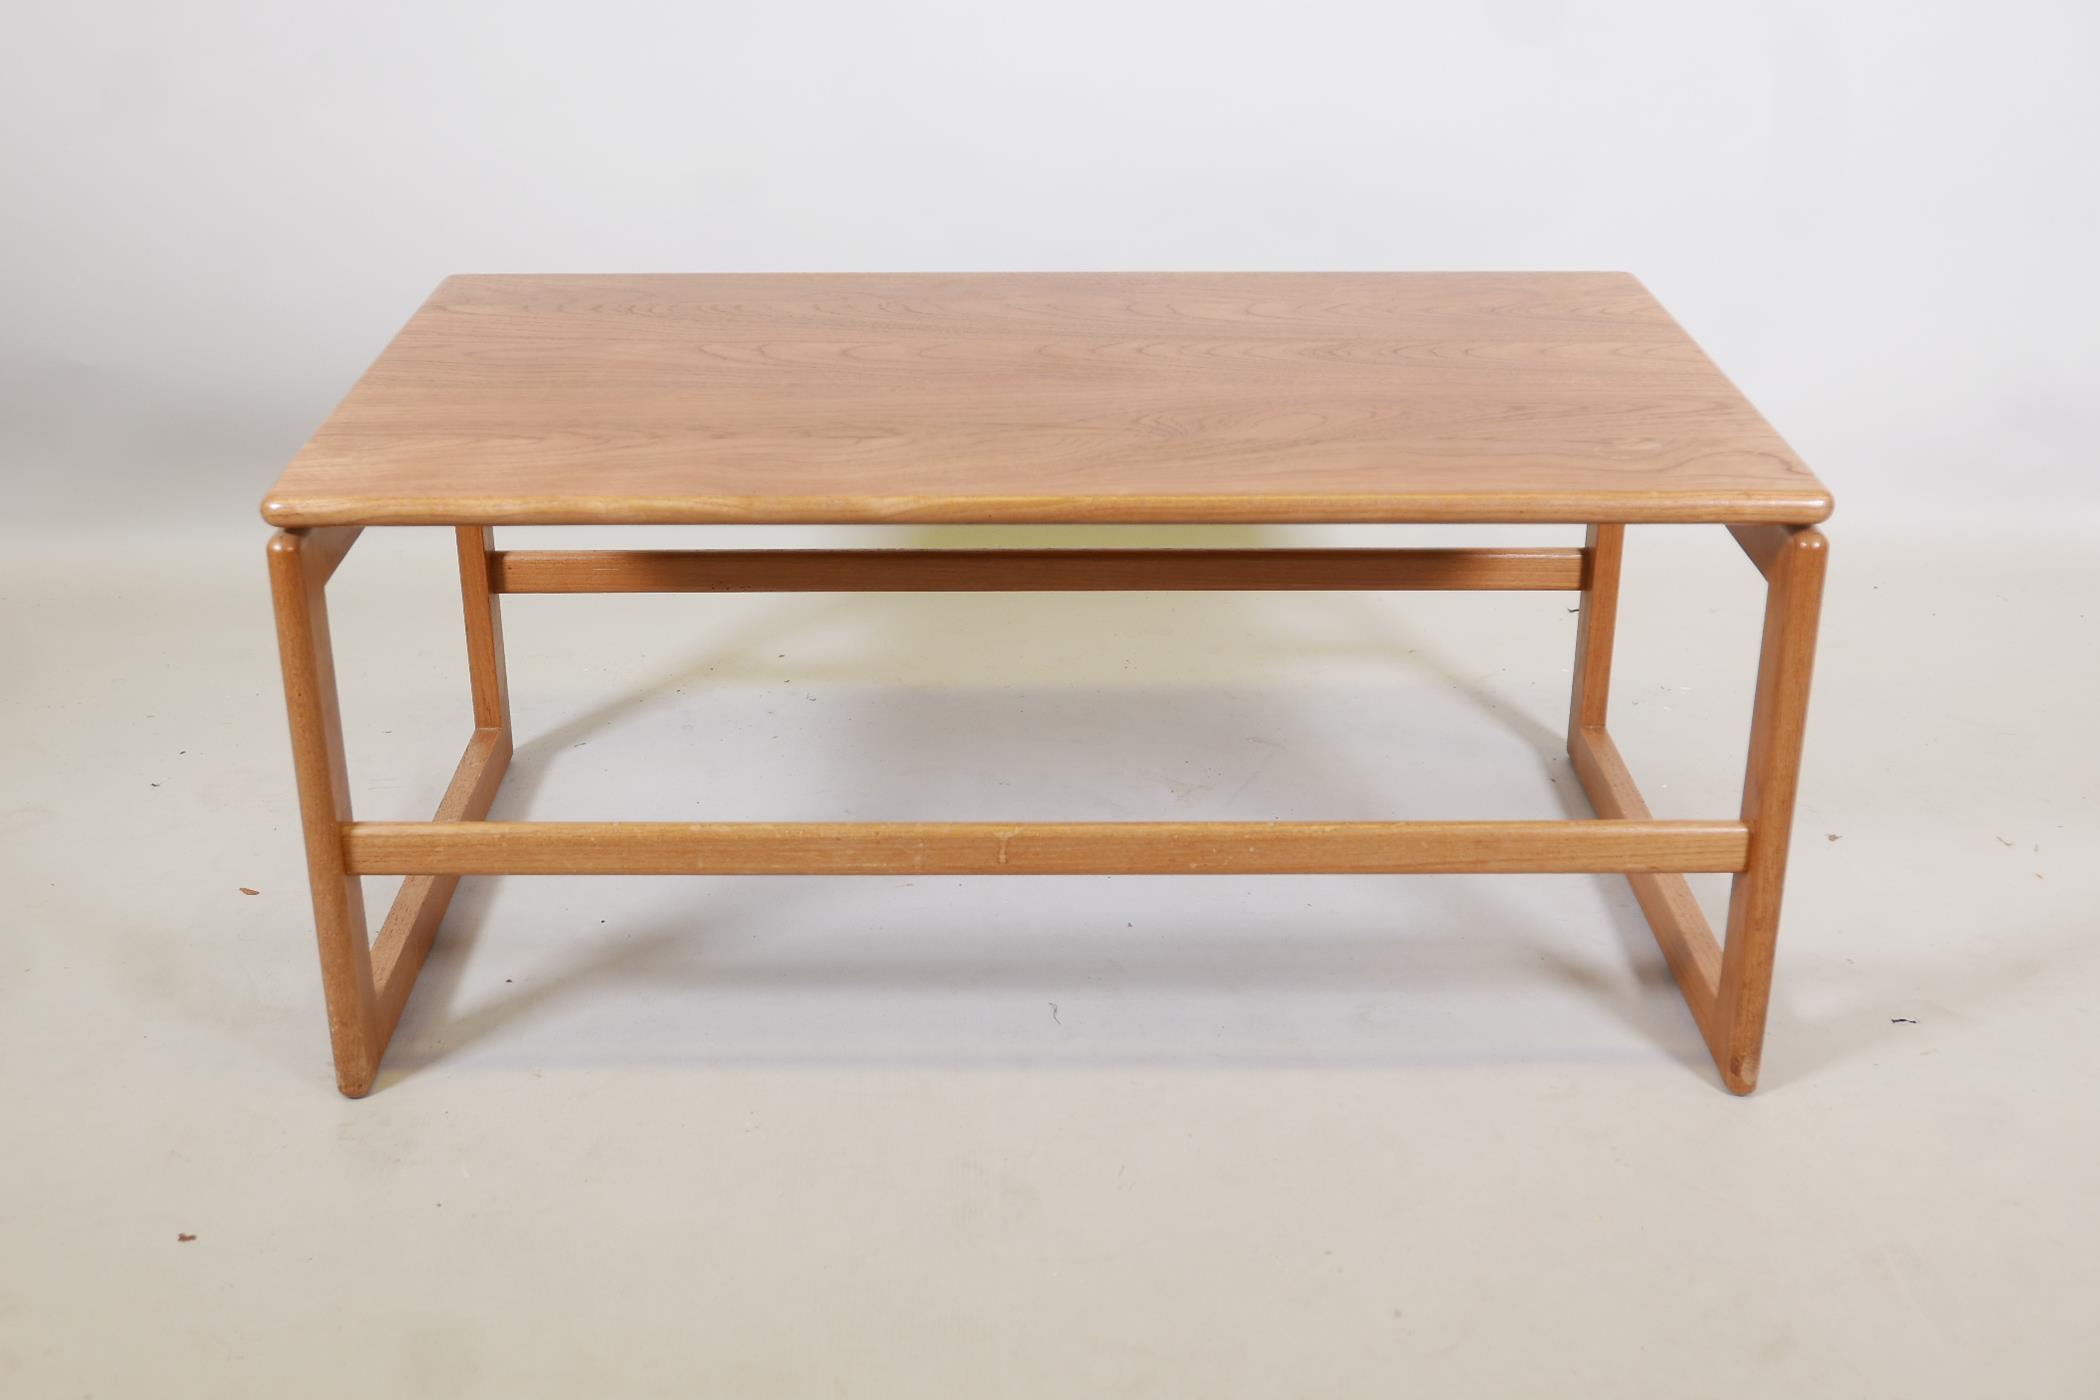 A mid century teak coffee table, 35" x 20" x 16" - Image 2 of 3